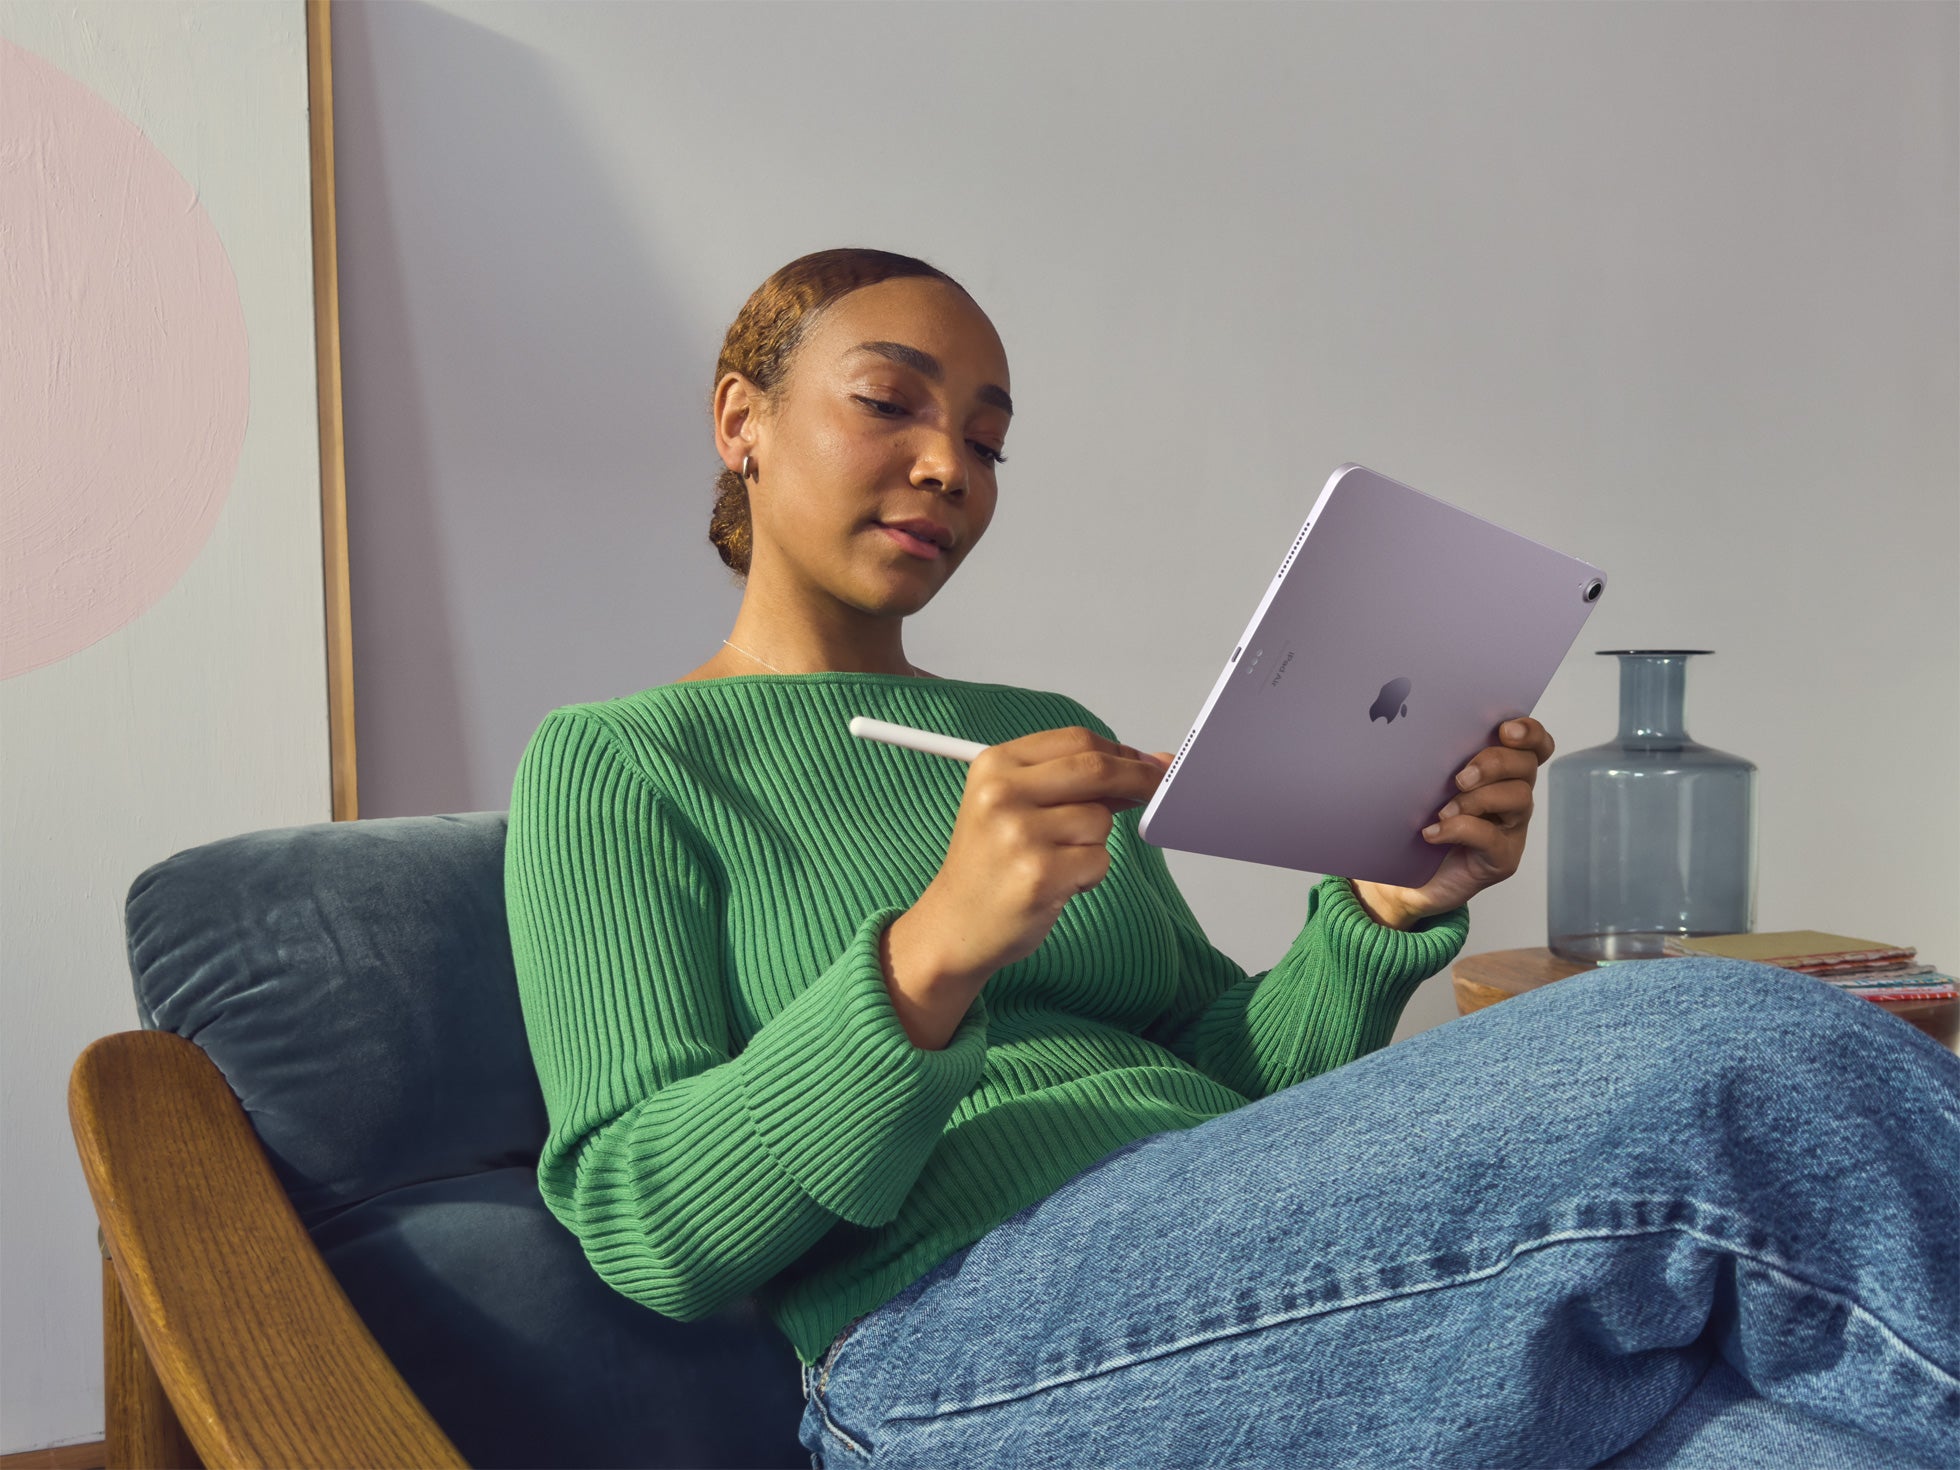 Apple Event: New iPads